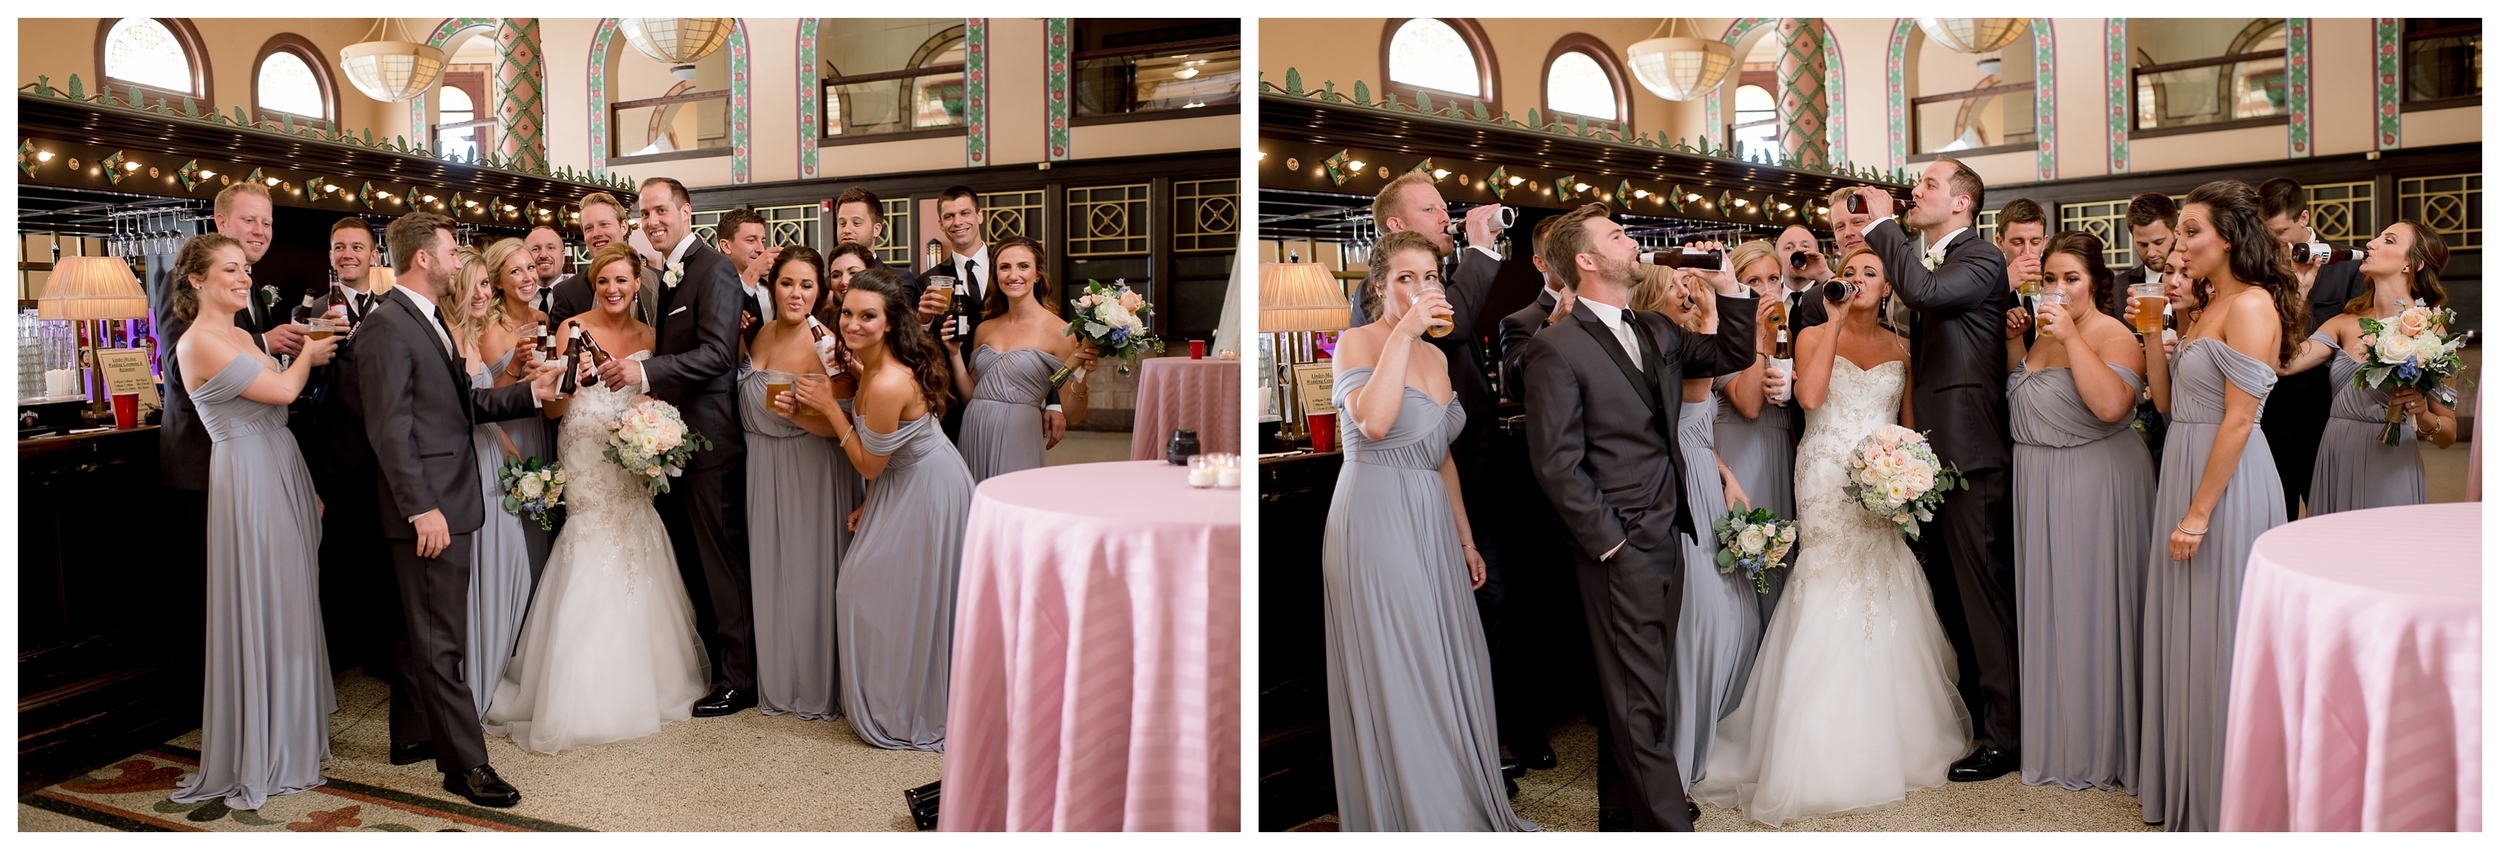 Rebecca_Bridges_Photography_Indianapolis_Wedding_Photographer_4172.jpg